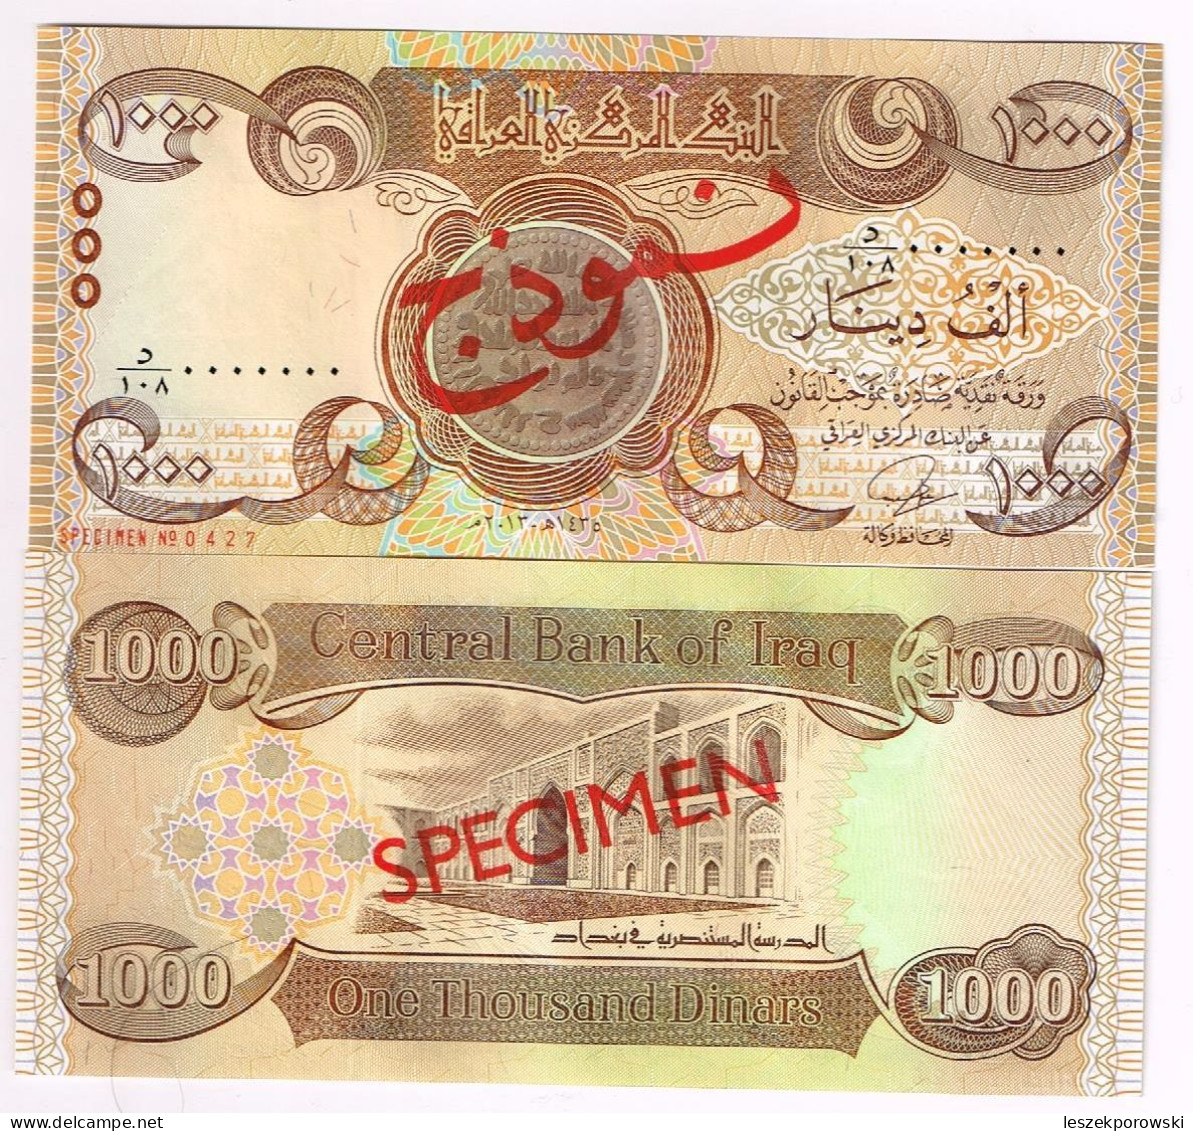 Iraq 1000 Dinars SPECIMEN P-99 2013 UNC Rare - Iraq